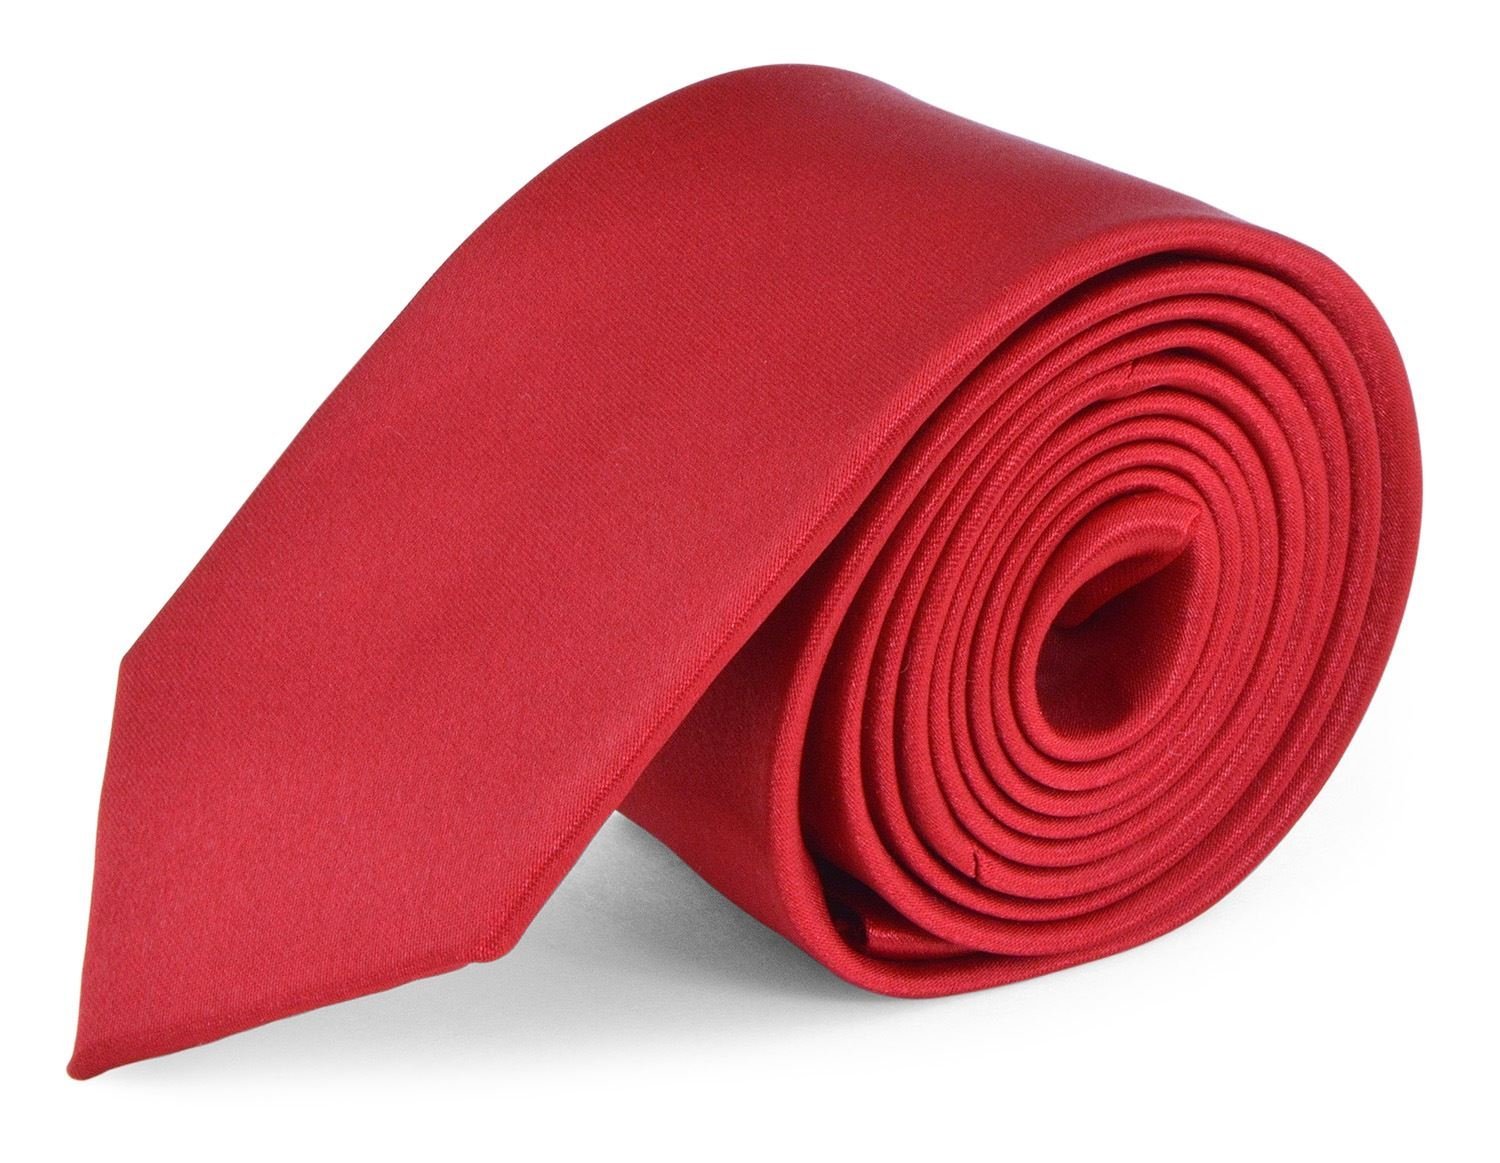 MDR Solid Satin Tie | Necktie for Men’s | Ties Pure Color Regular 57 inches long Neck Tie | Wedding Office Graduation Uniform - Ruby Red 2.5 inch